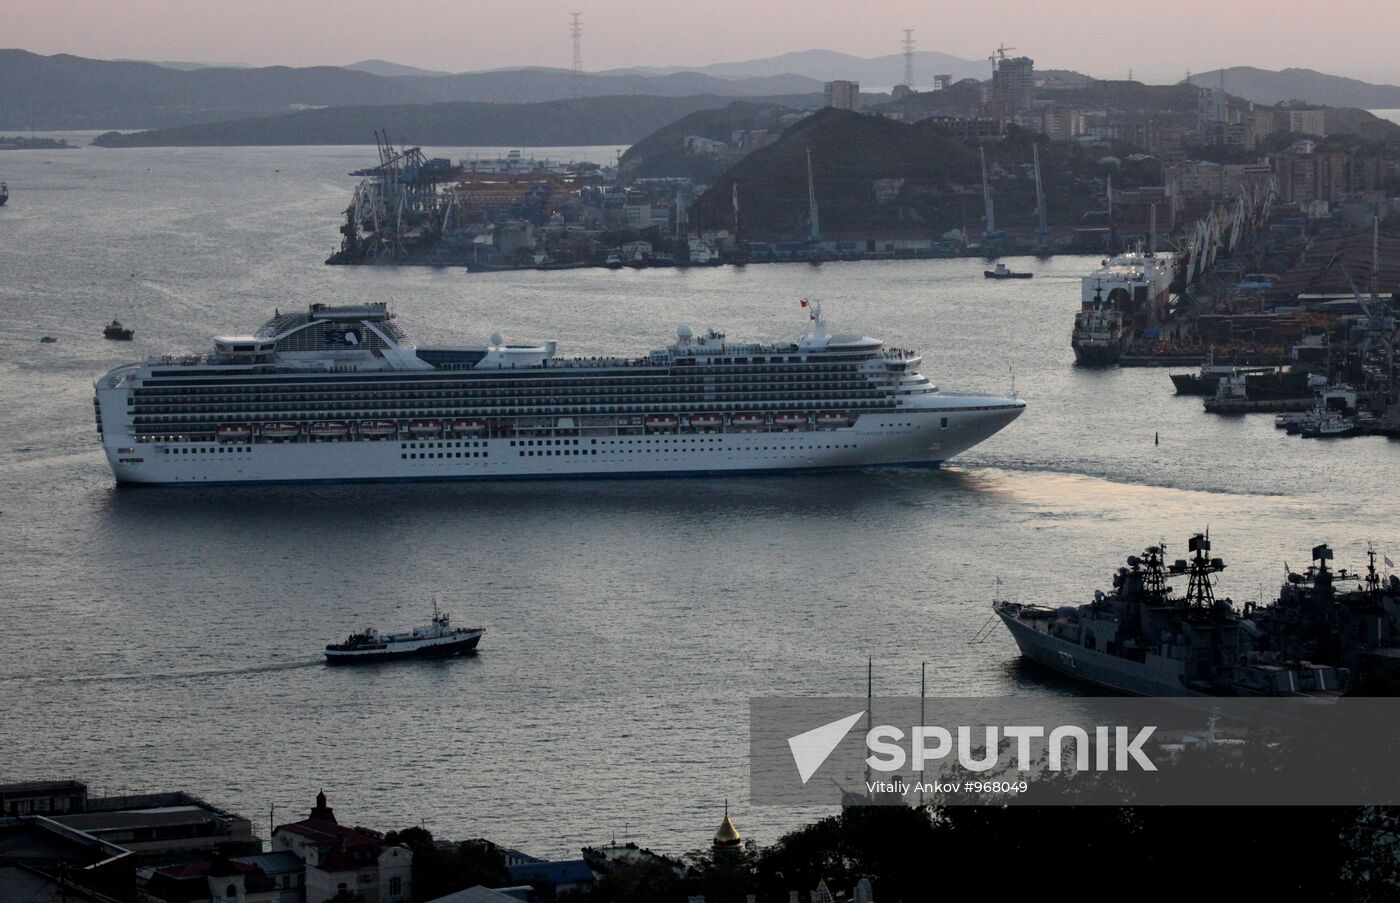 The Diamond Princess superliner calls at Vladivostok